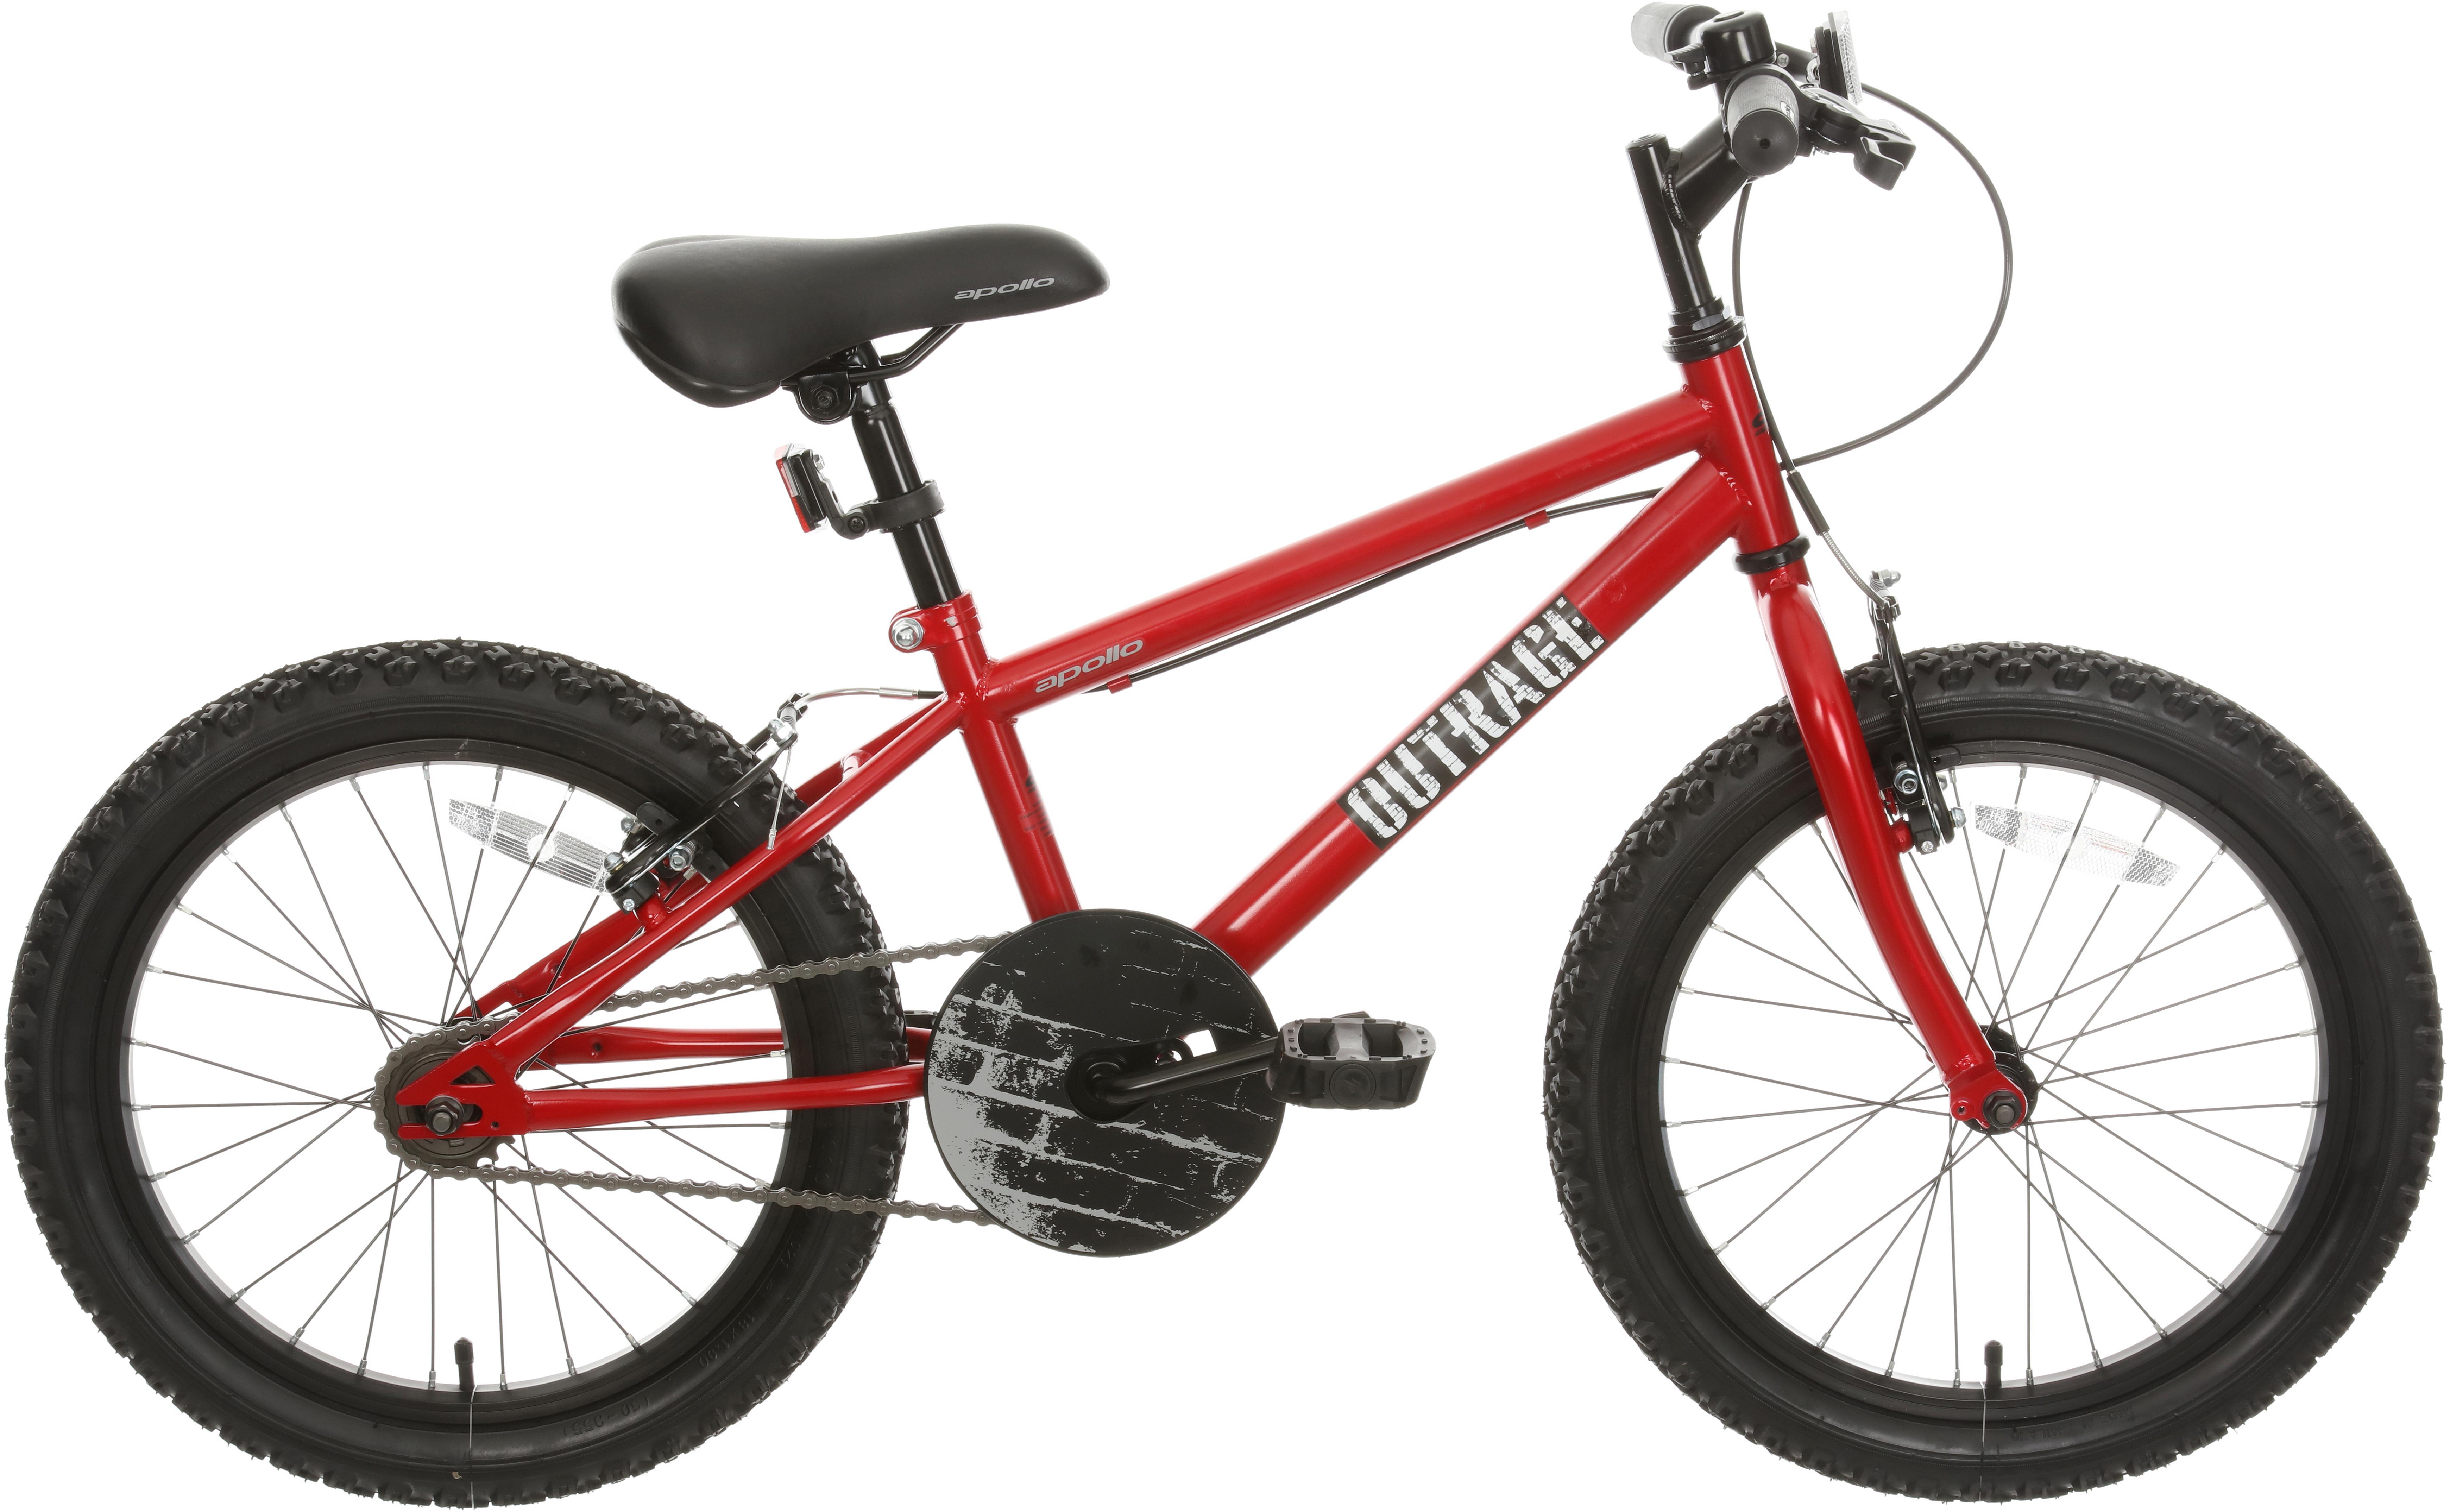 24 inch wheel size bike